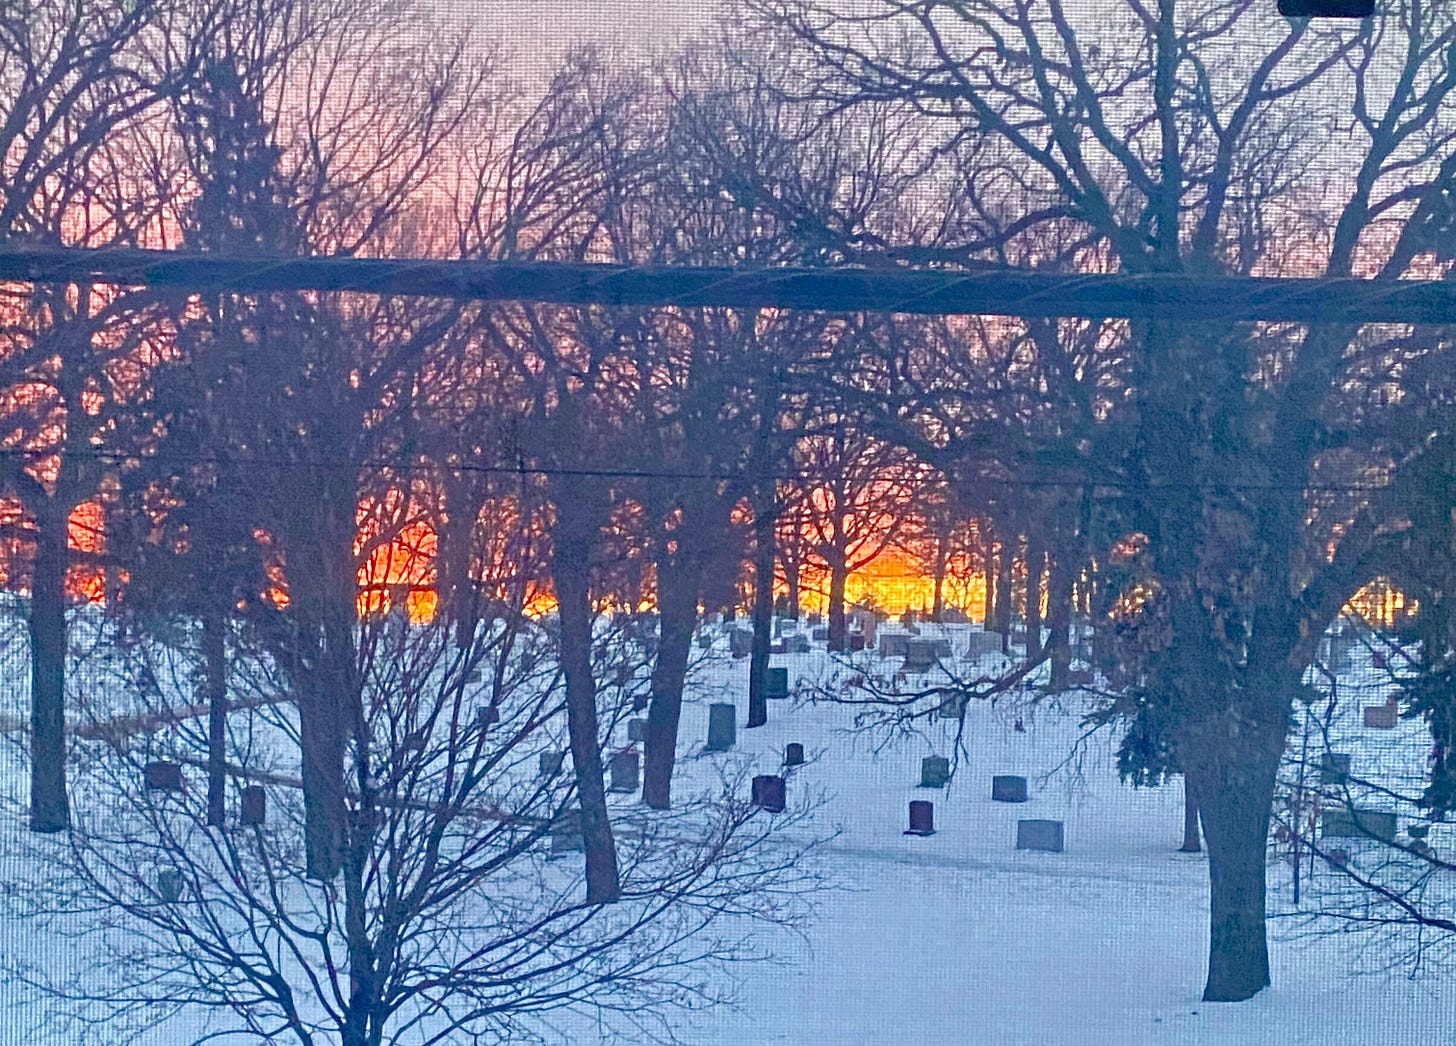 Sunset, through a window, over a snowy cemetery